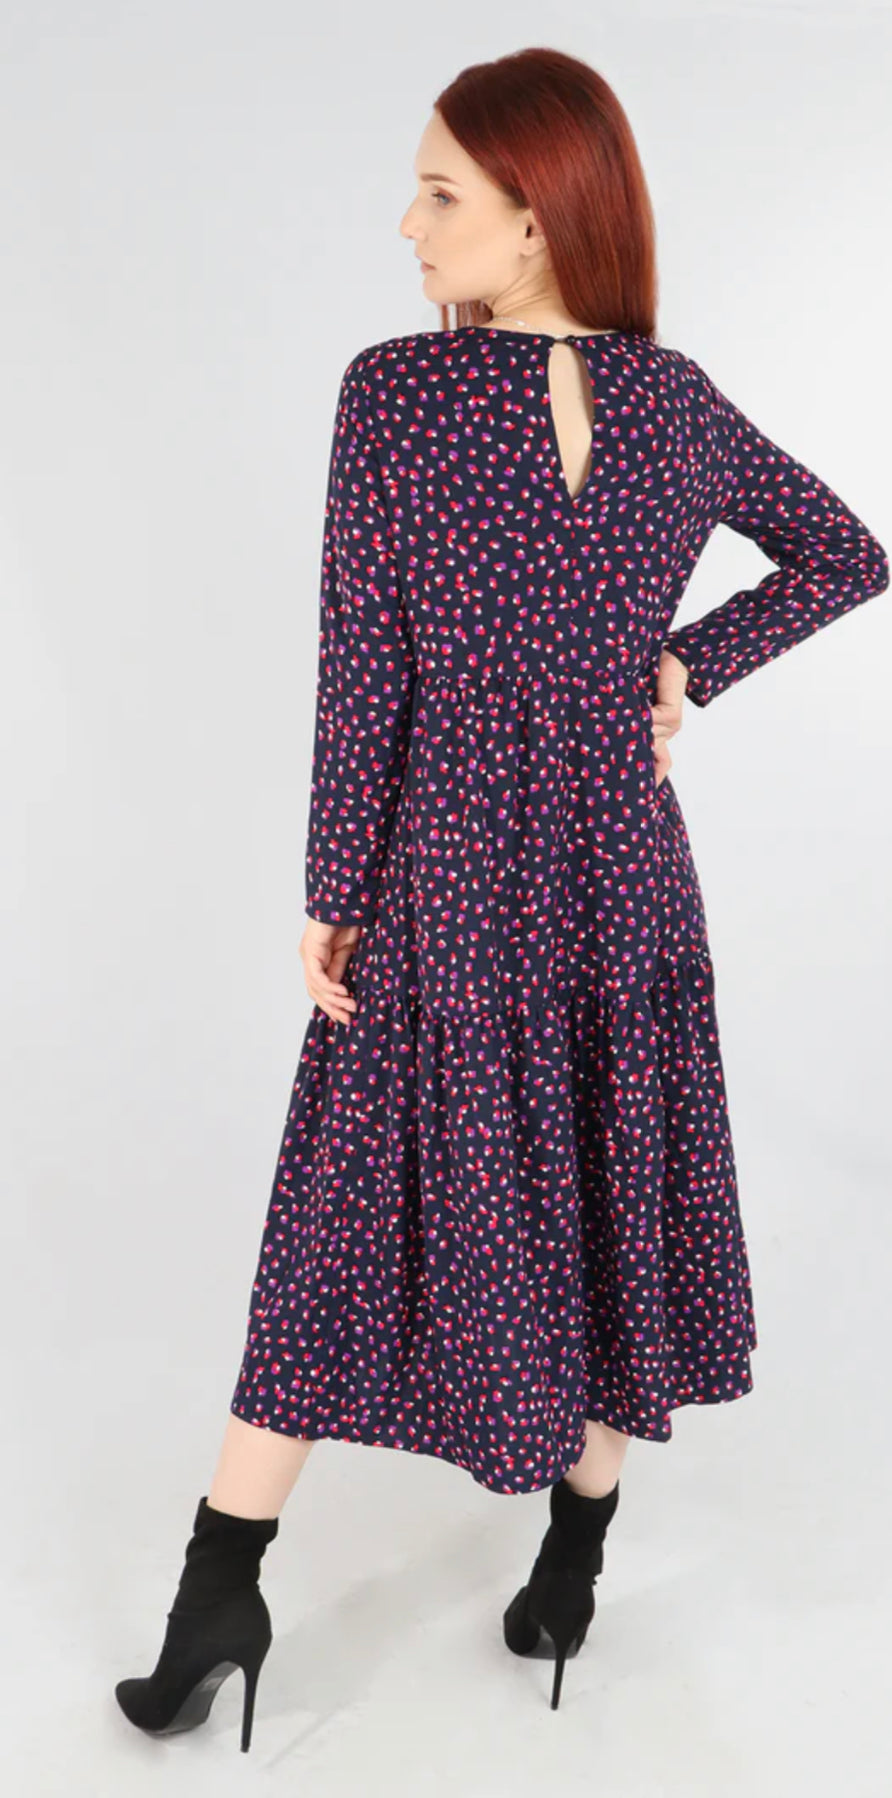 Smudge Leopard Print Tiered Dress - Navy/Pink